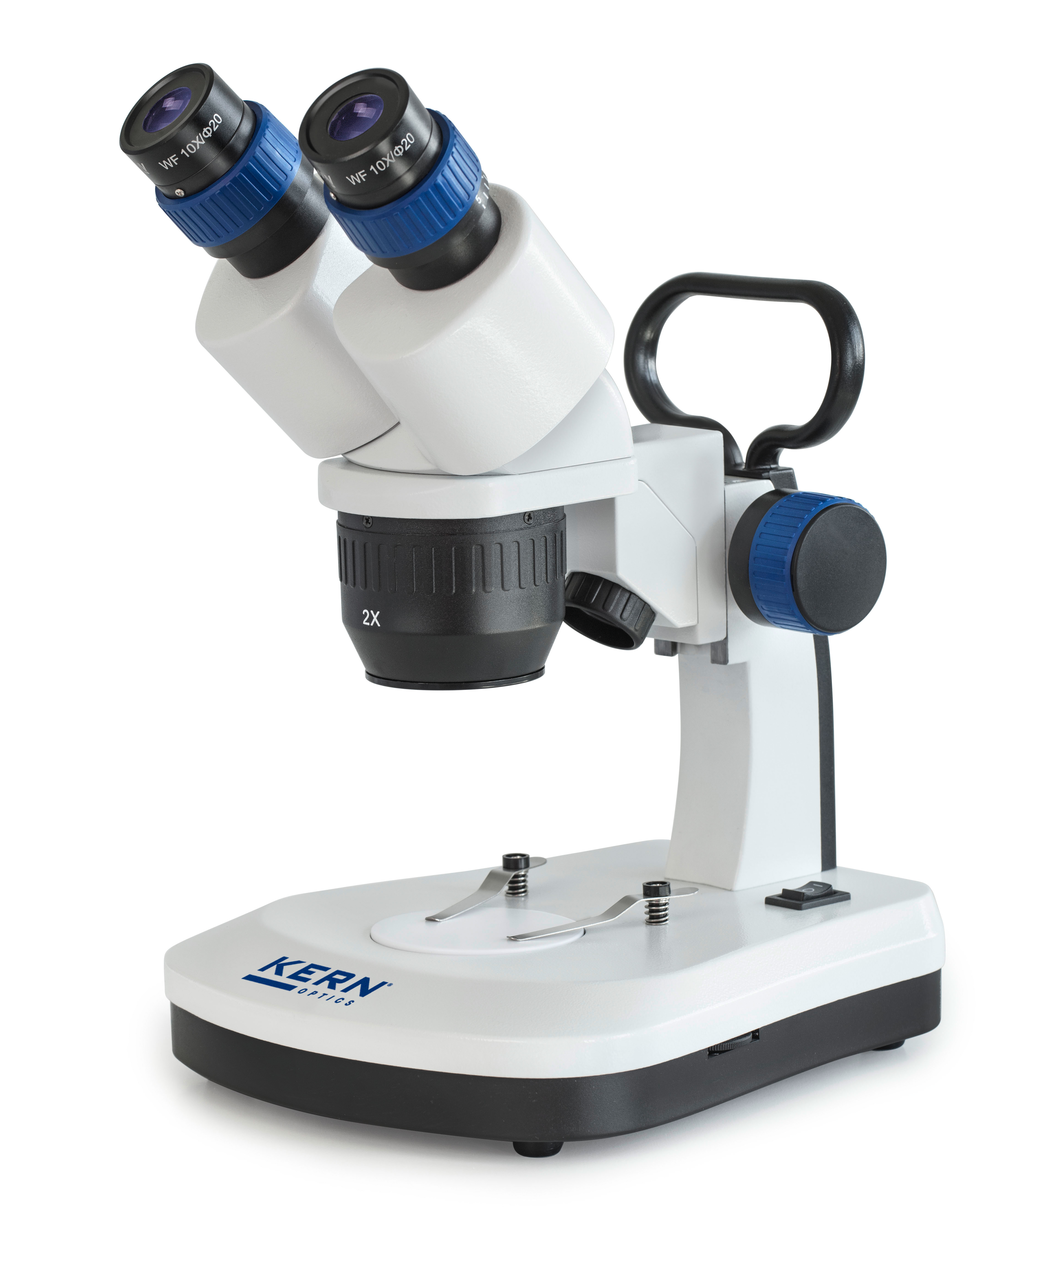 Stereomicroscope, Binocular Tube Type, 2x And 4x Magnification